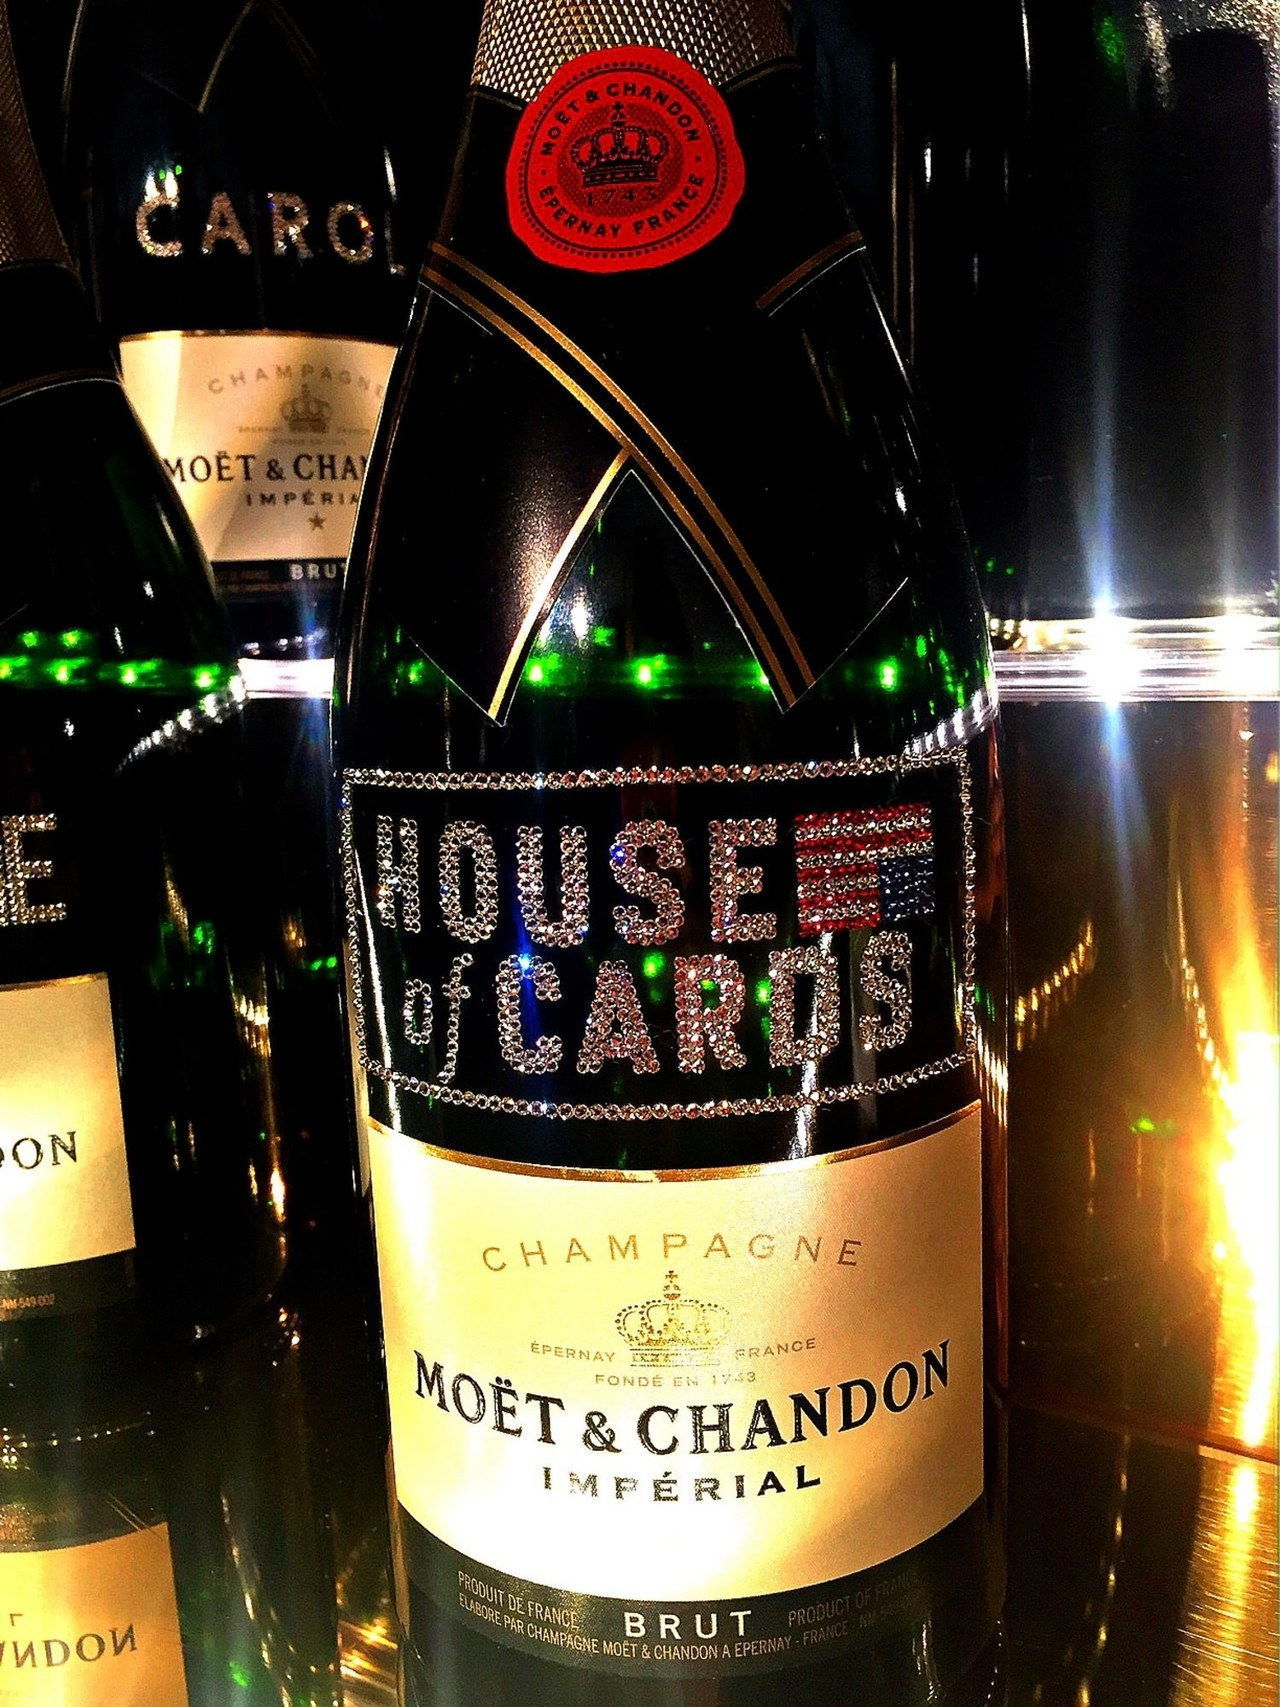 مويت and chandon champagne